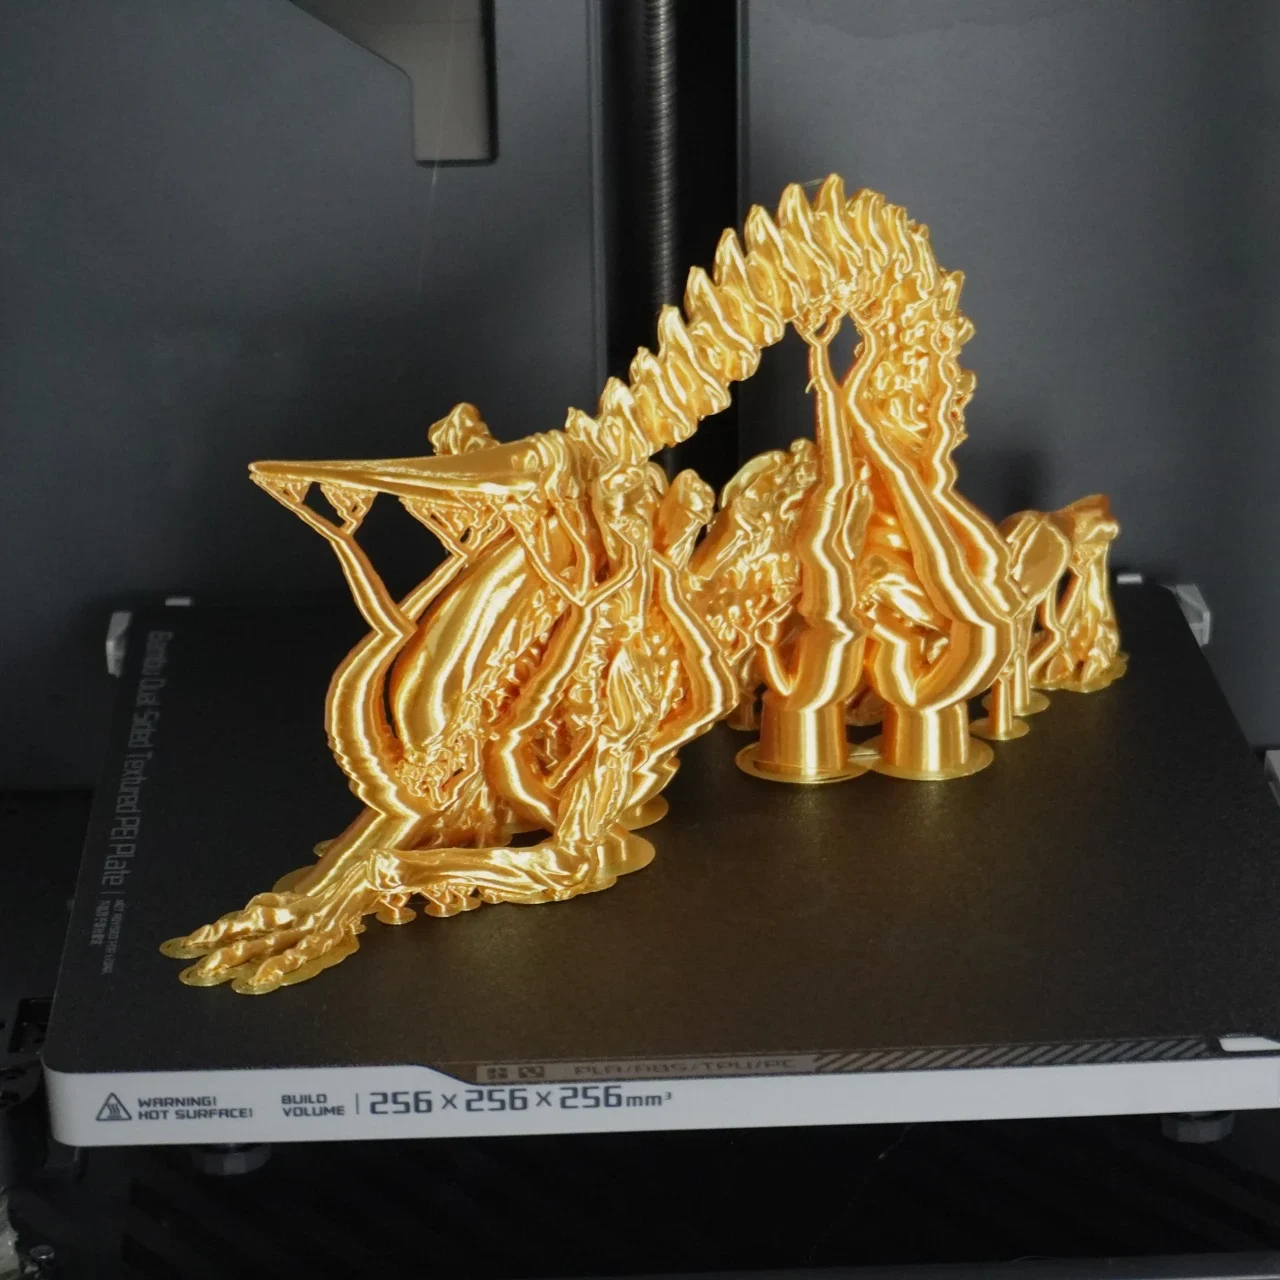 Xenomorph printed in gold silk PLA @ 0.16mm resolution